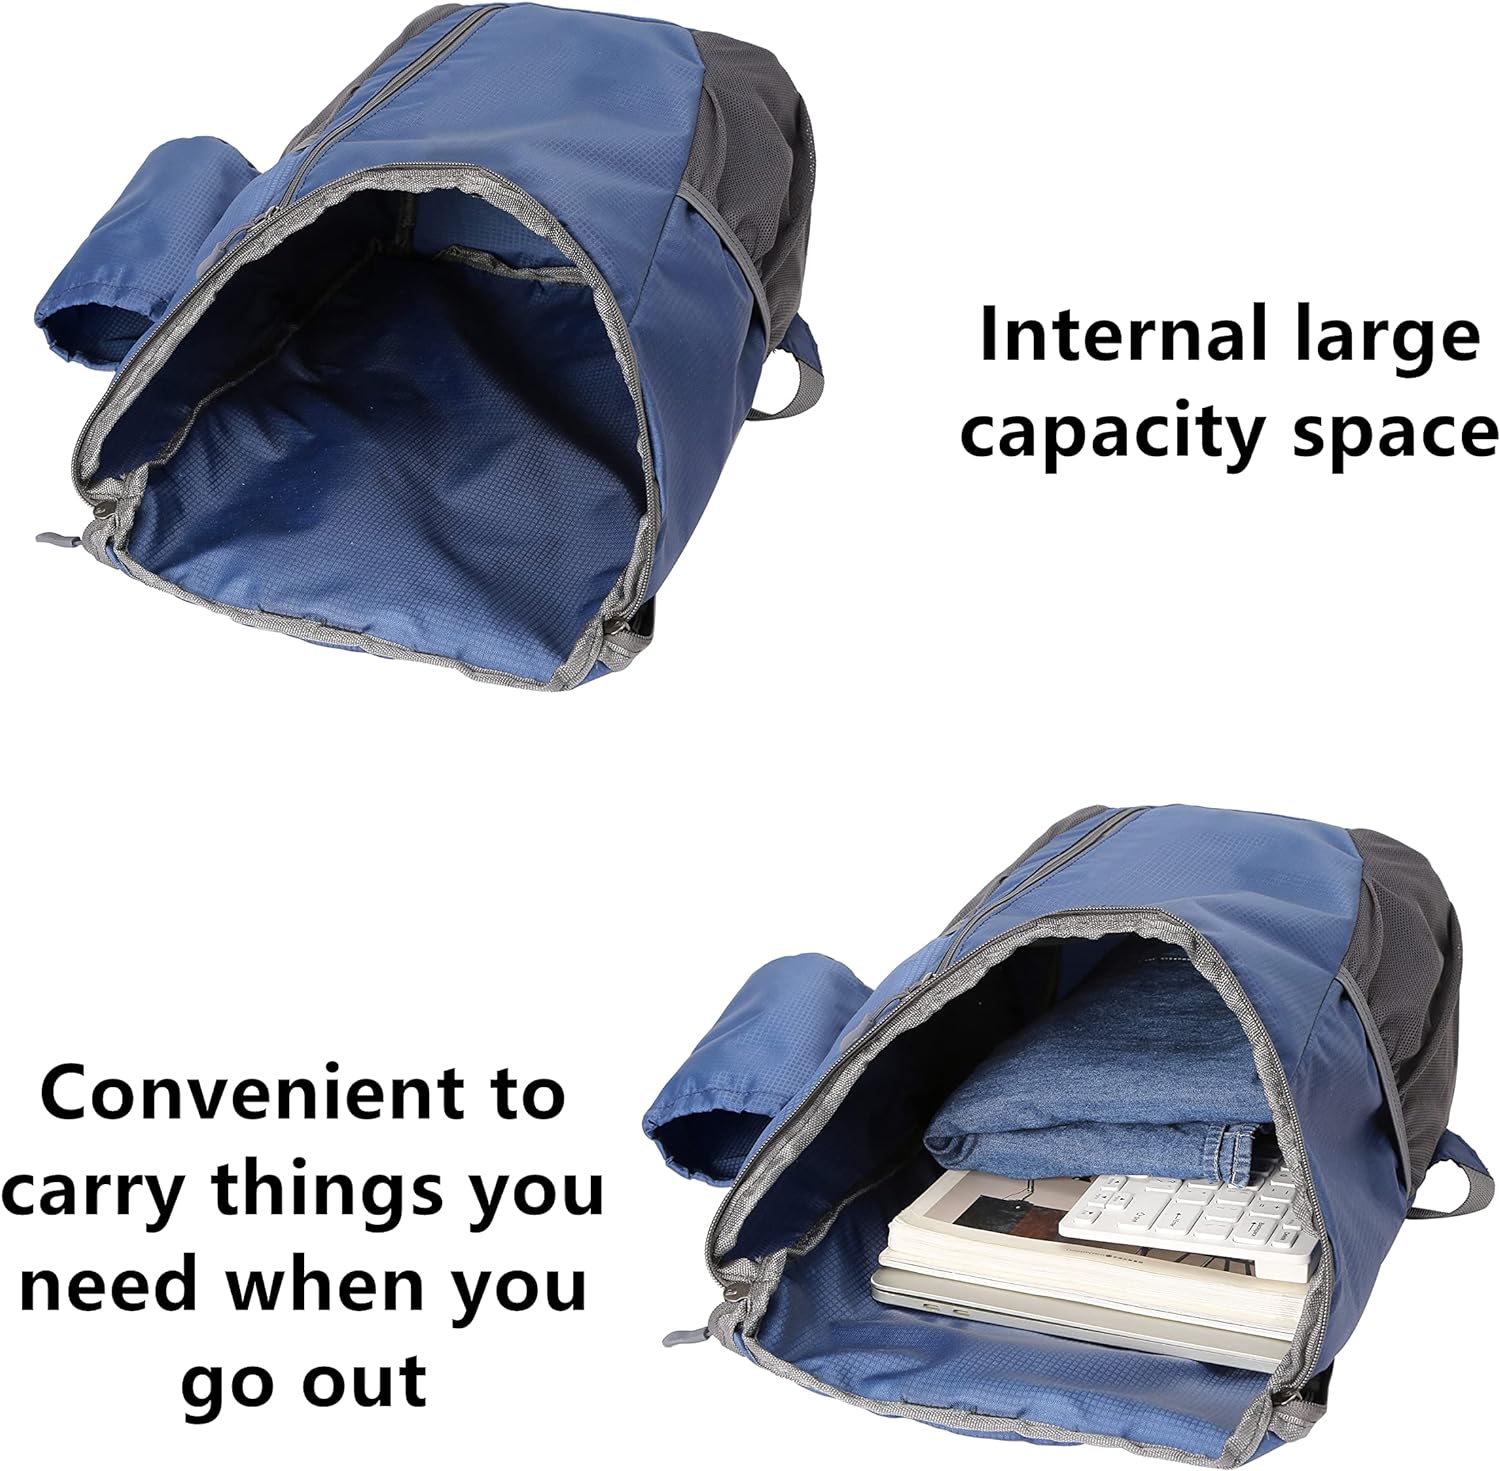 KEYDUACU Unisex foldable backpack portable backpack hiking travel backpack wear-resistant waterproof backpack outdoor sports backpack(blue)